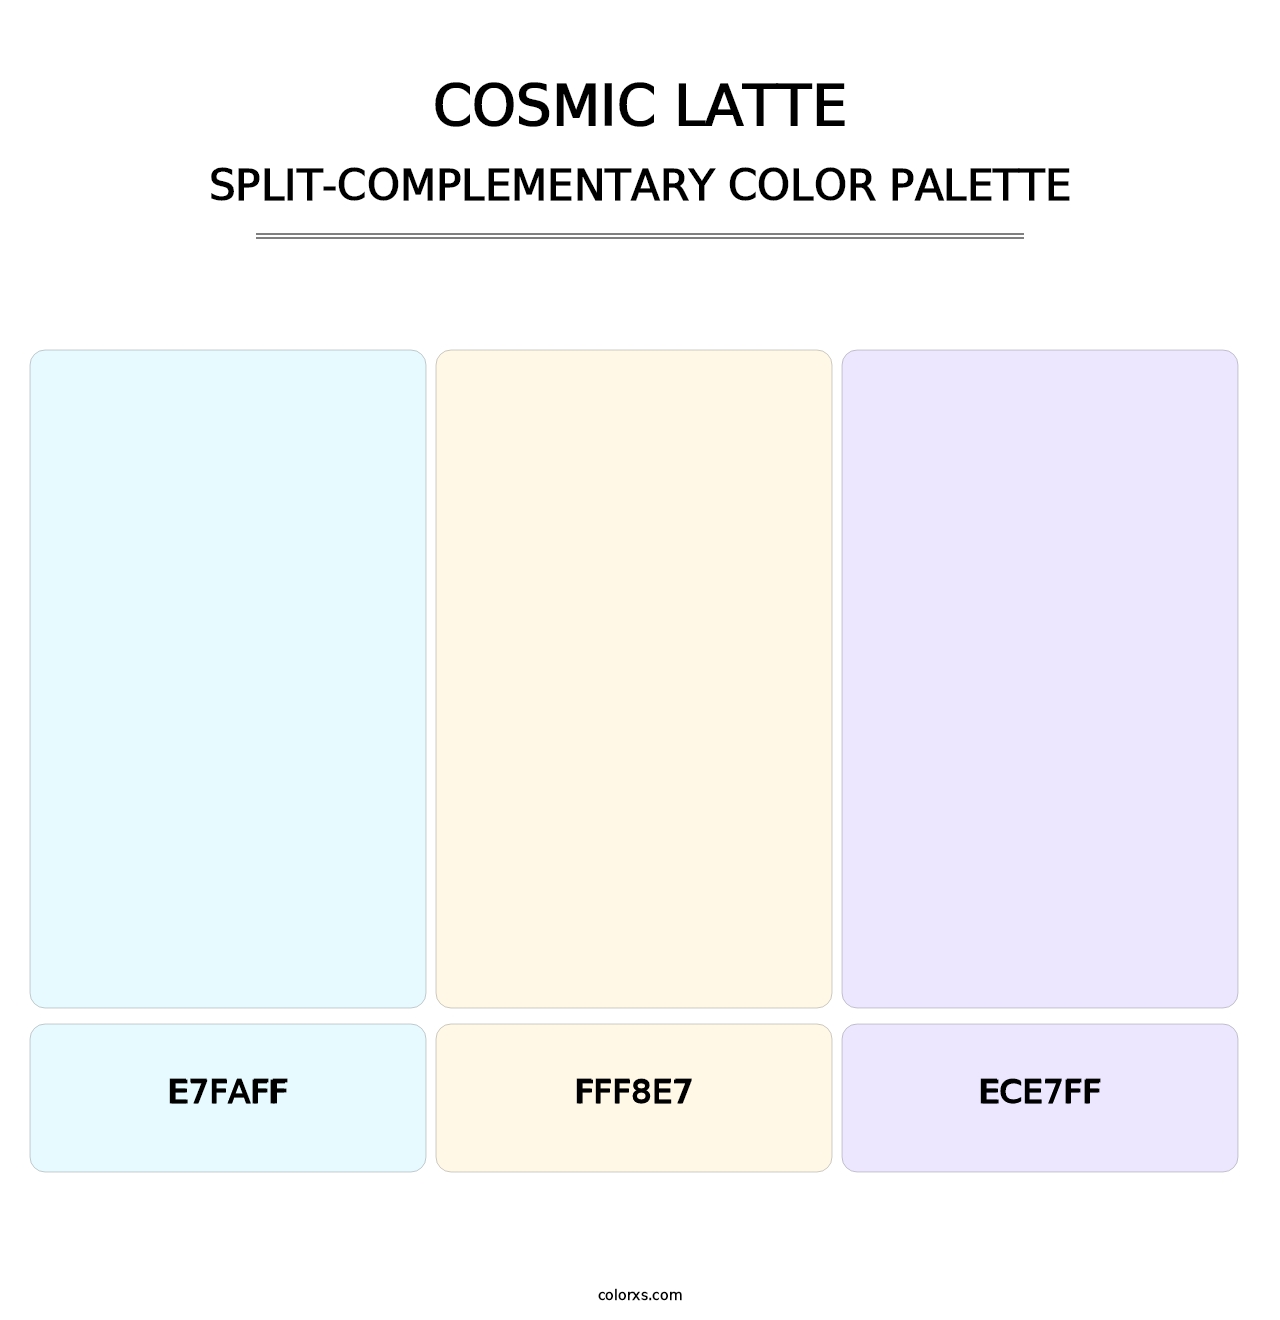 Cosmic Latte - Split-Complementary Color Palette